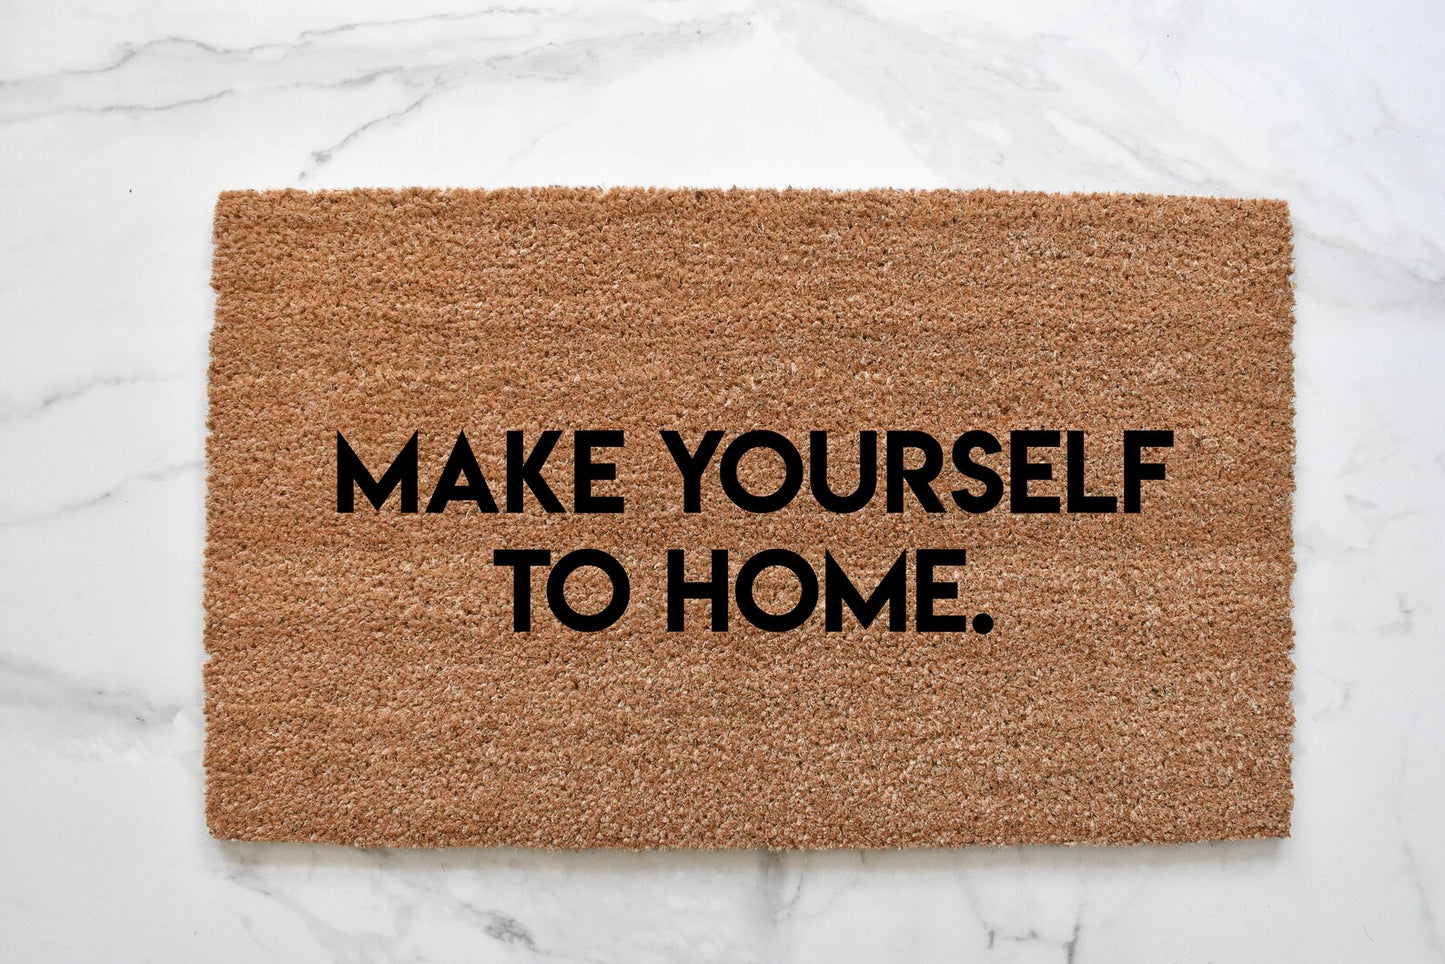 Make Yourself To Home Doormat